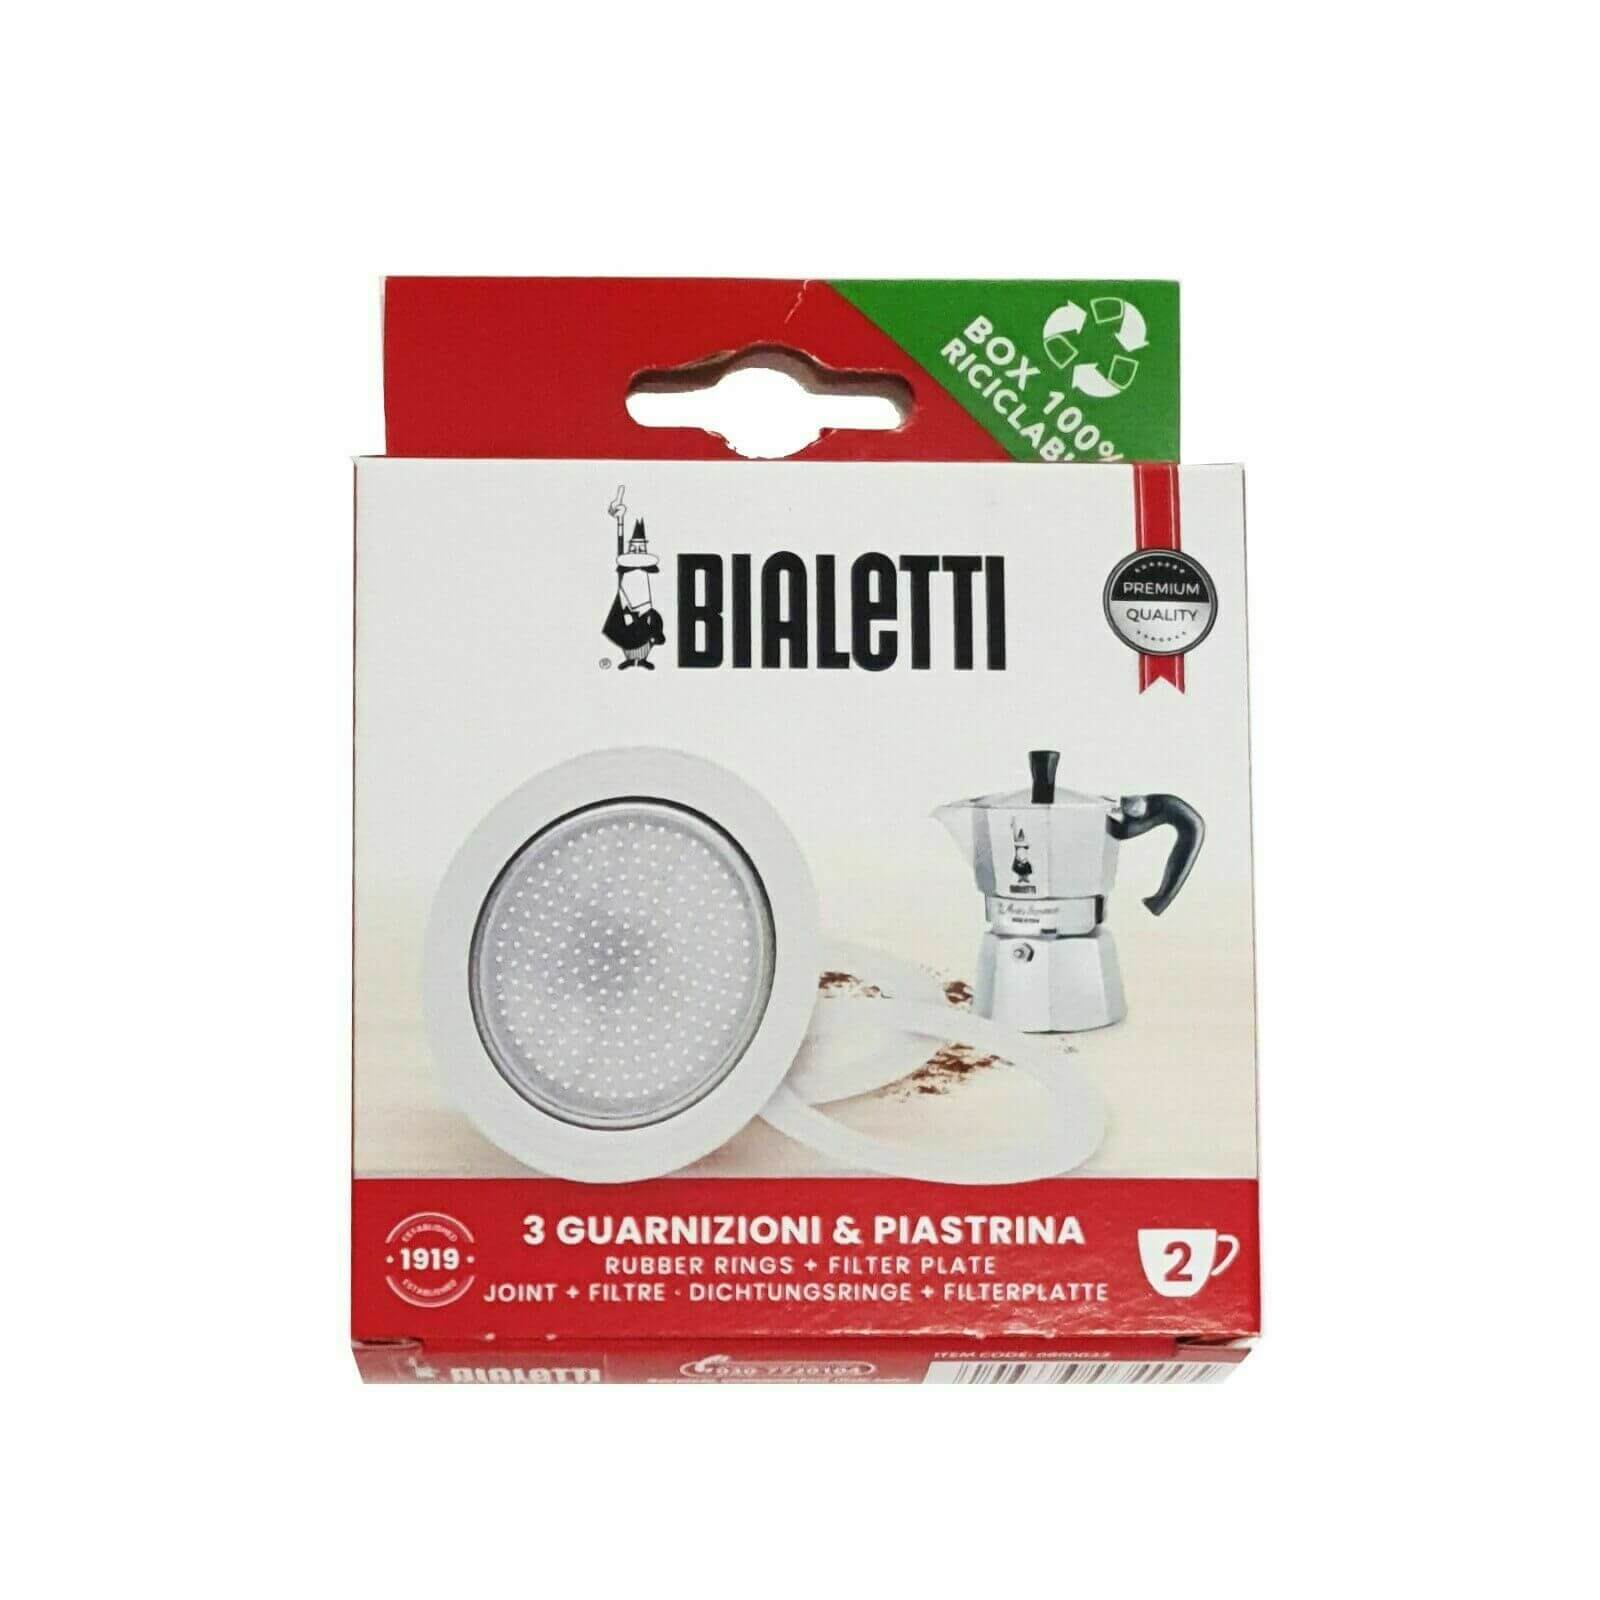 Bialetti coffee accessories